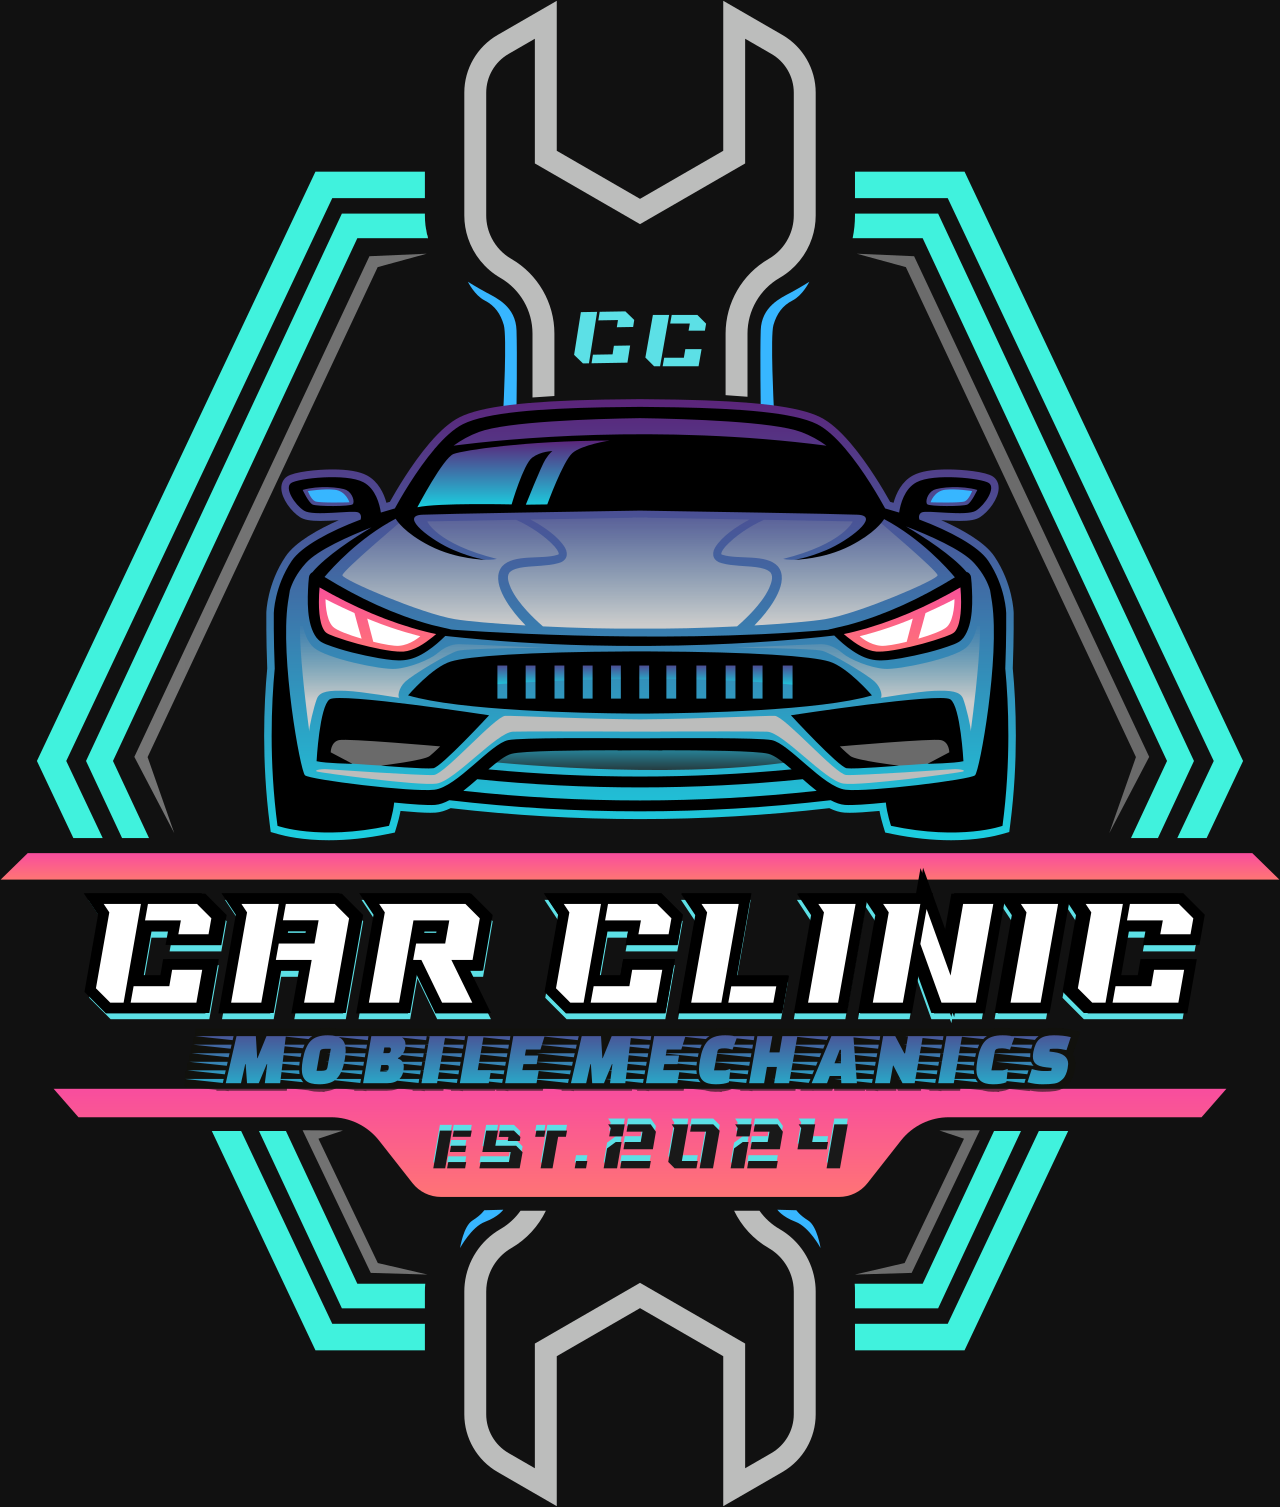 Car clinic's logo